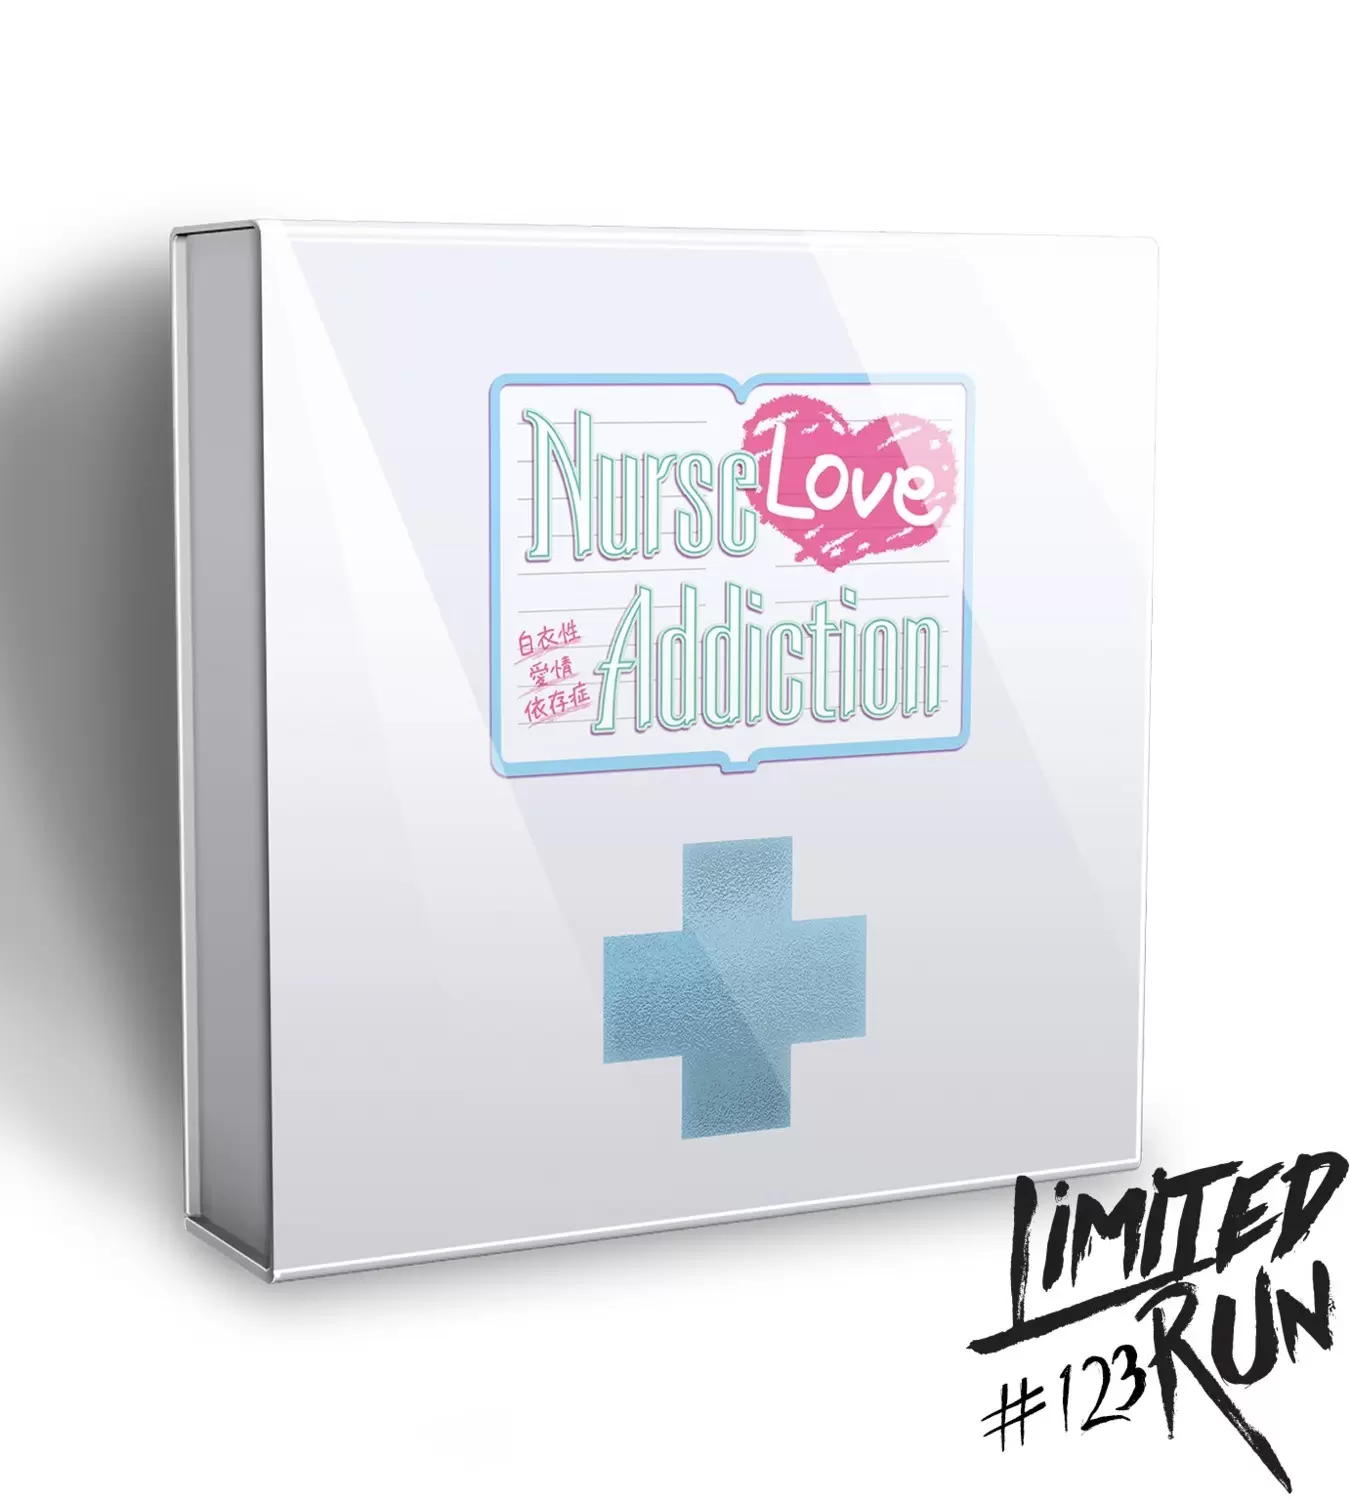 PS Vita Games - Nurse Love Addiction - Medkit Edition